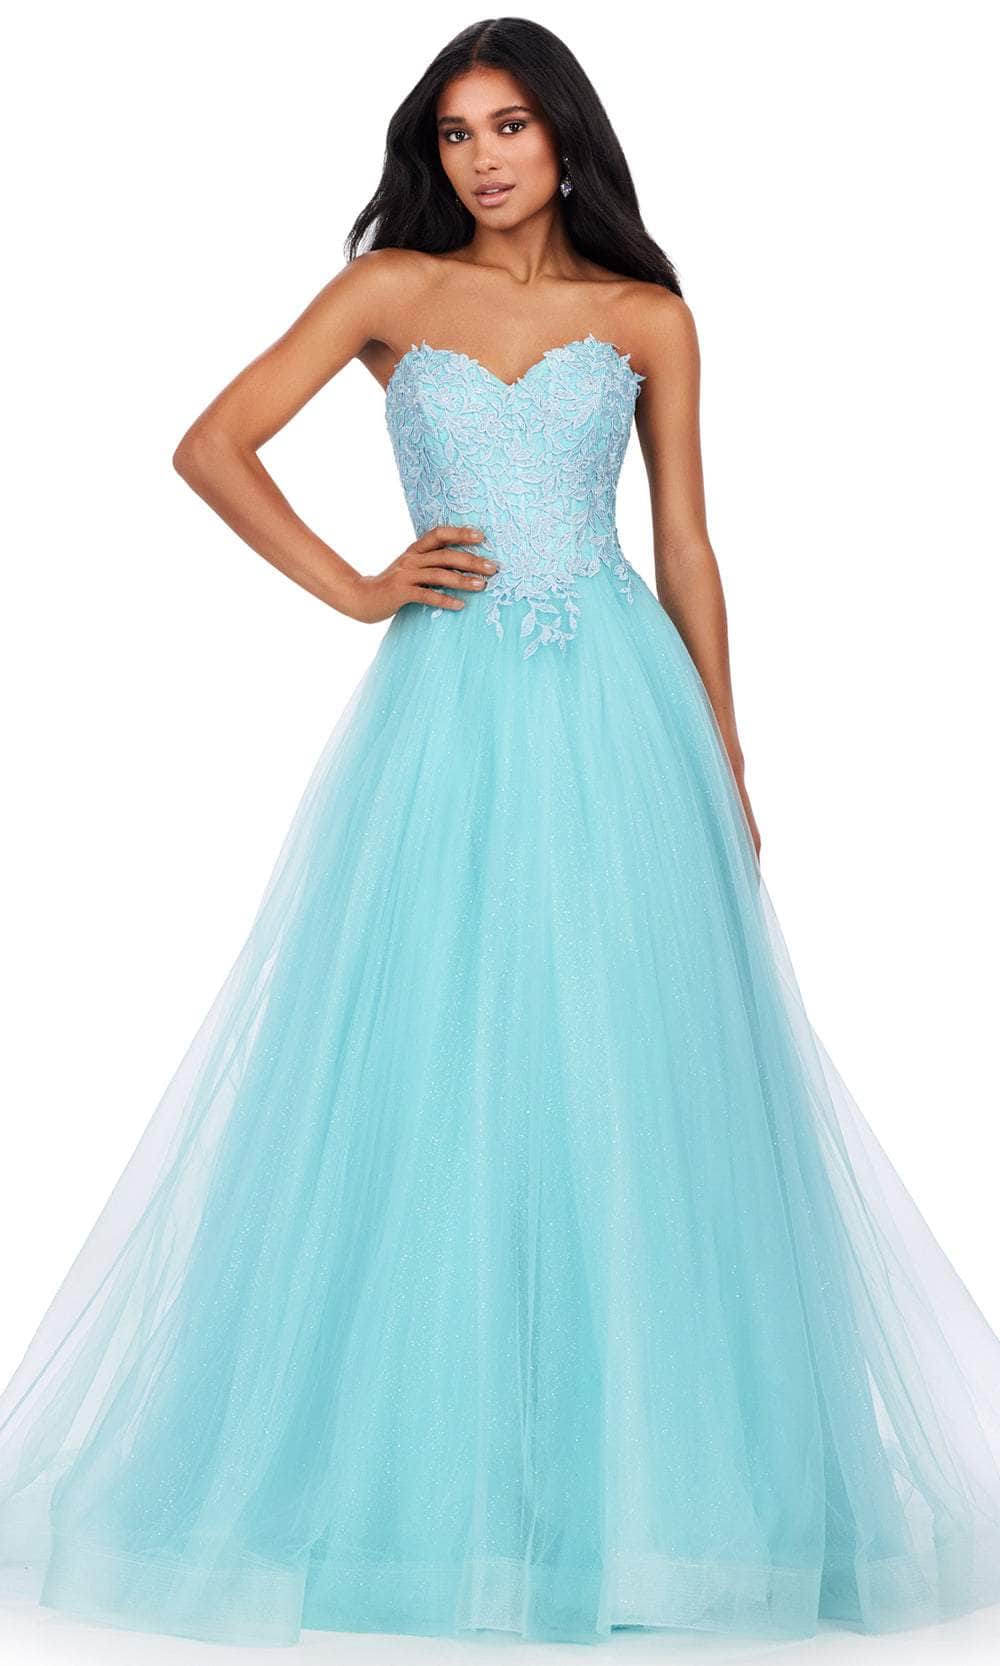 Ashley Lauren 11518 - Sweetheart Applique Prom Dress 00 /  Sky